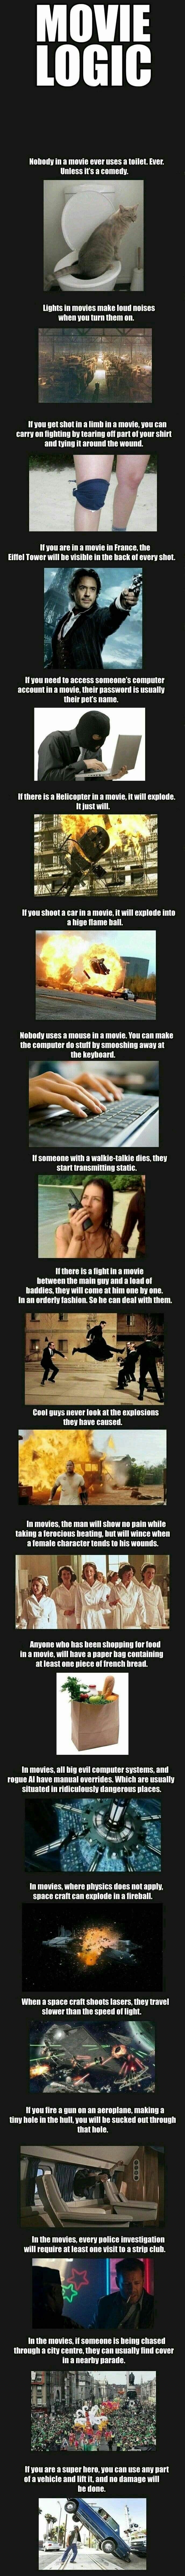 Movie logic